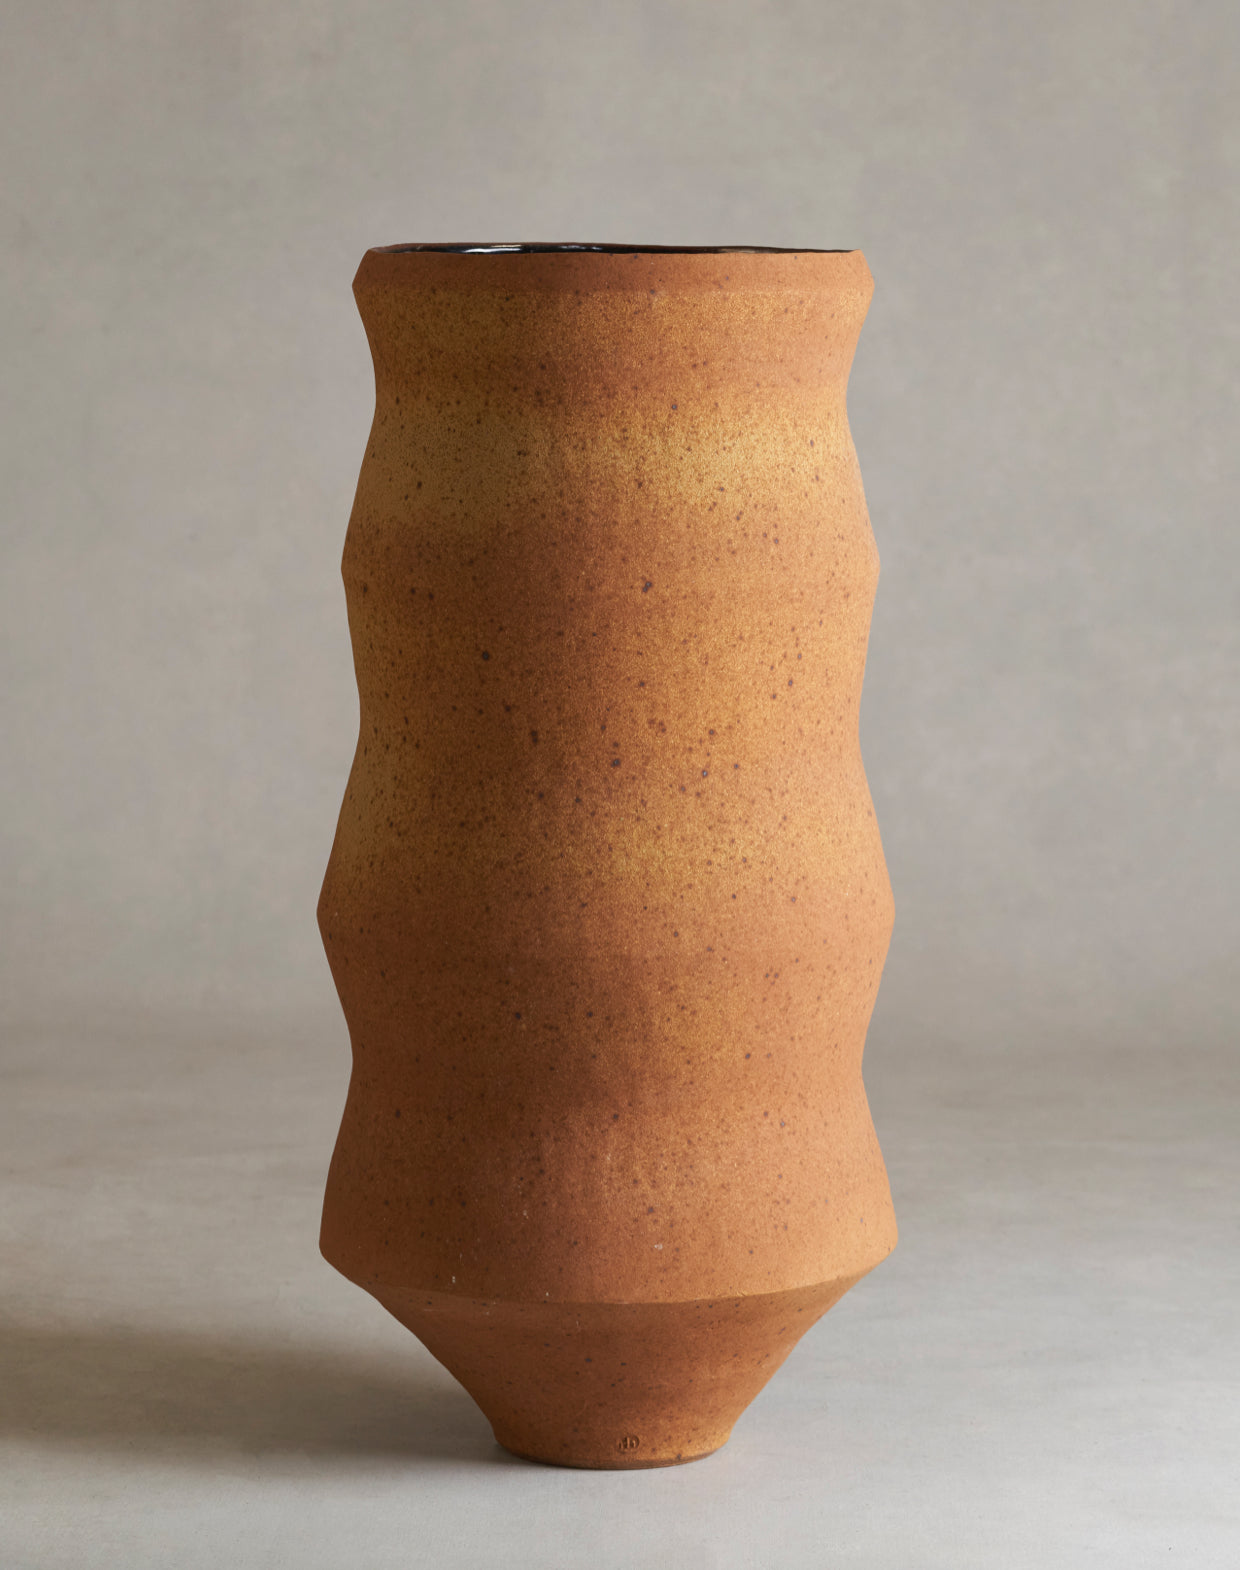 Rick Hintze Coiled Stoneware Vessel, "Untitled" No. 12